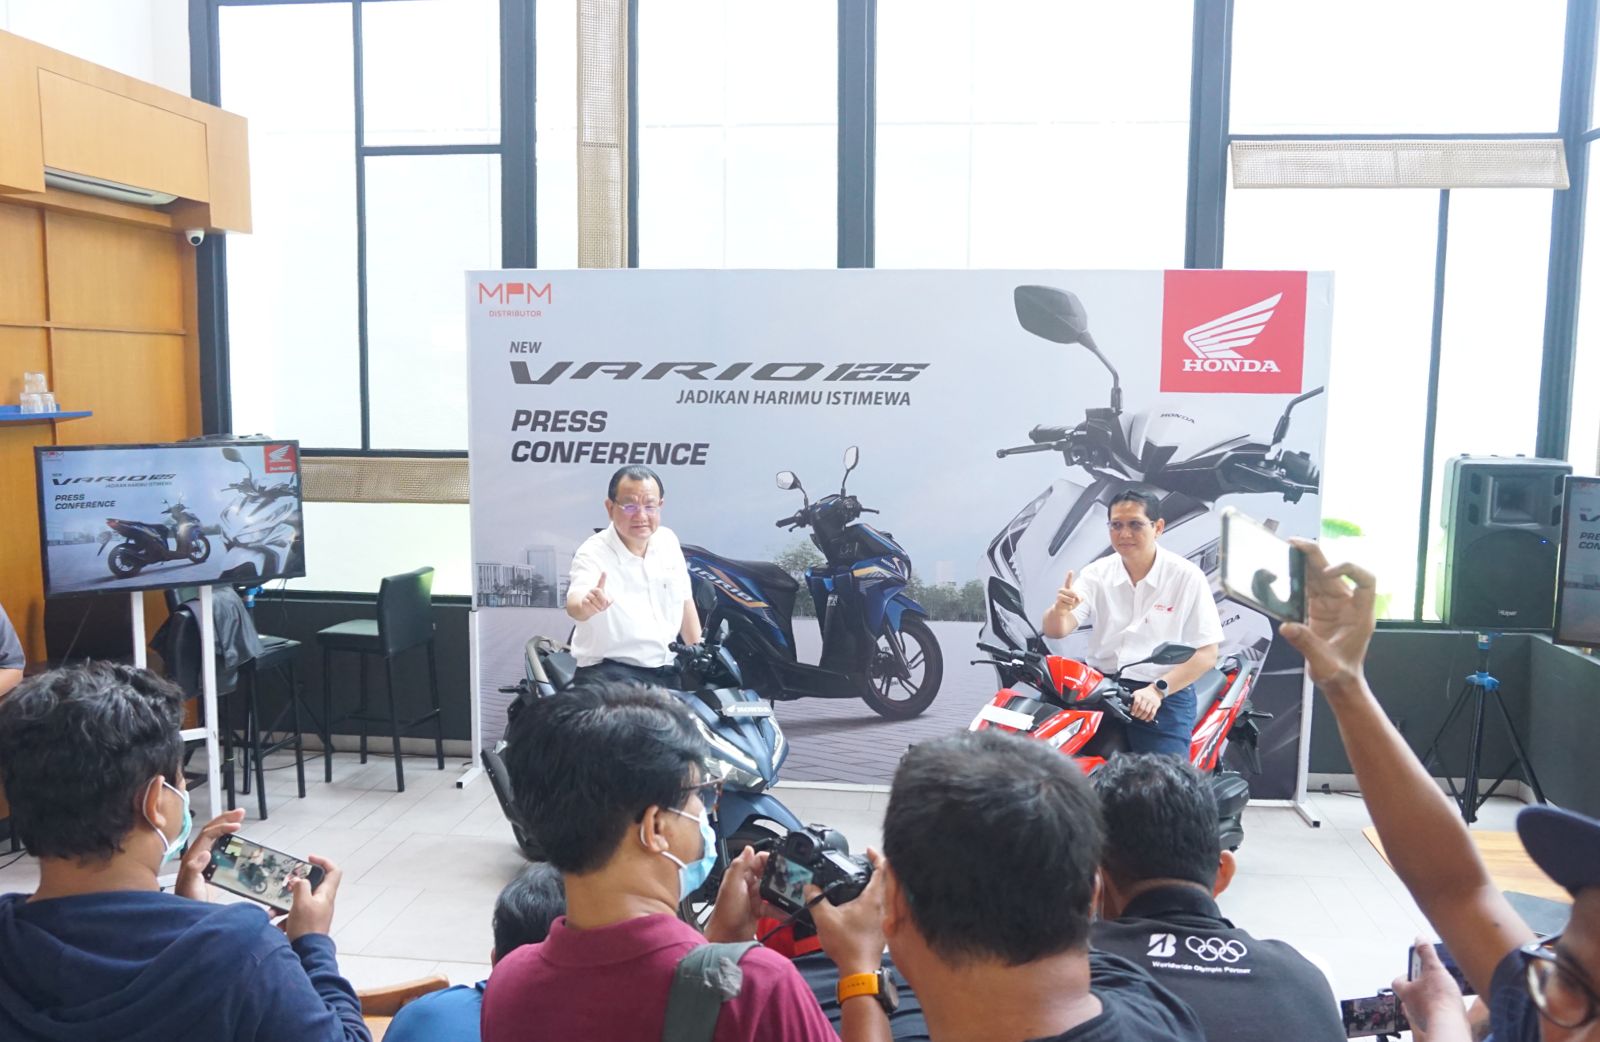 Harga New Honda Vario125 tahun 2022 area Kota Surabaya gans...